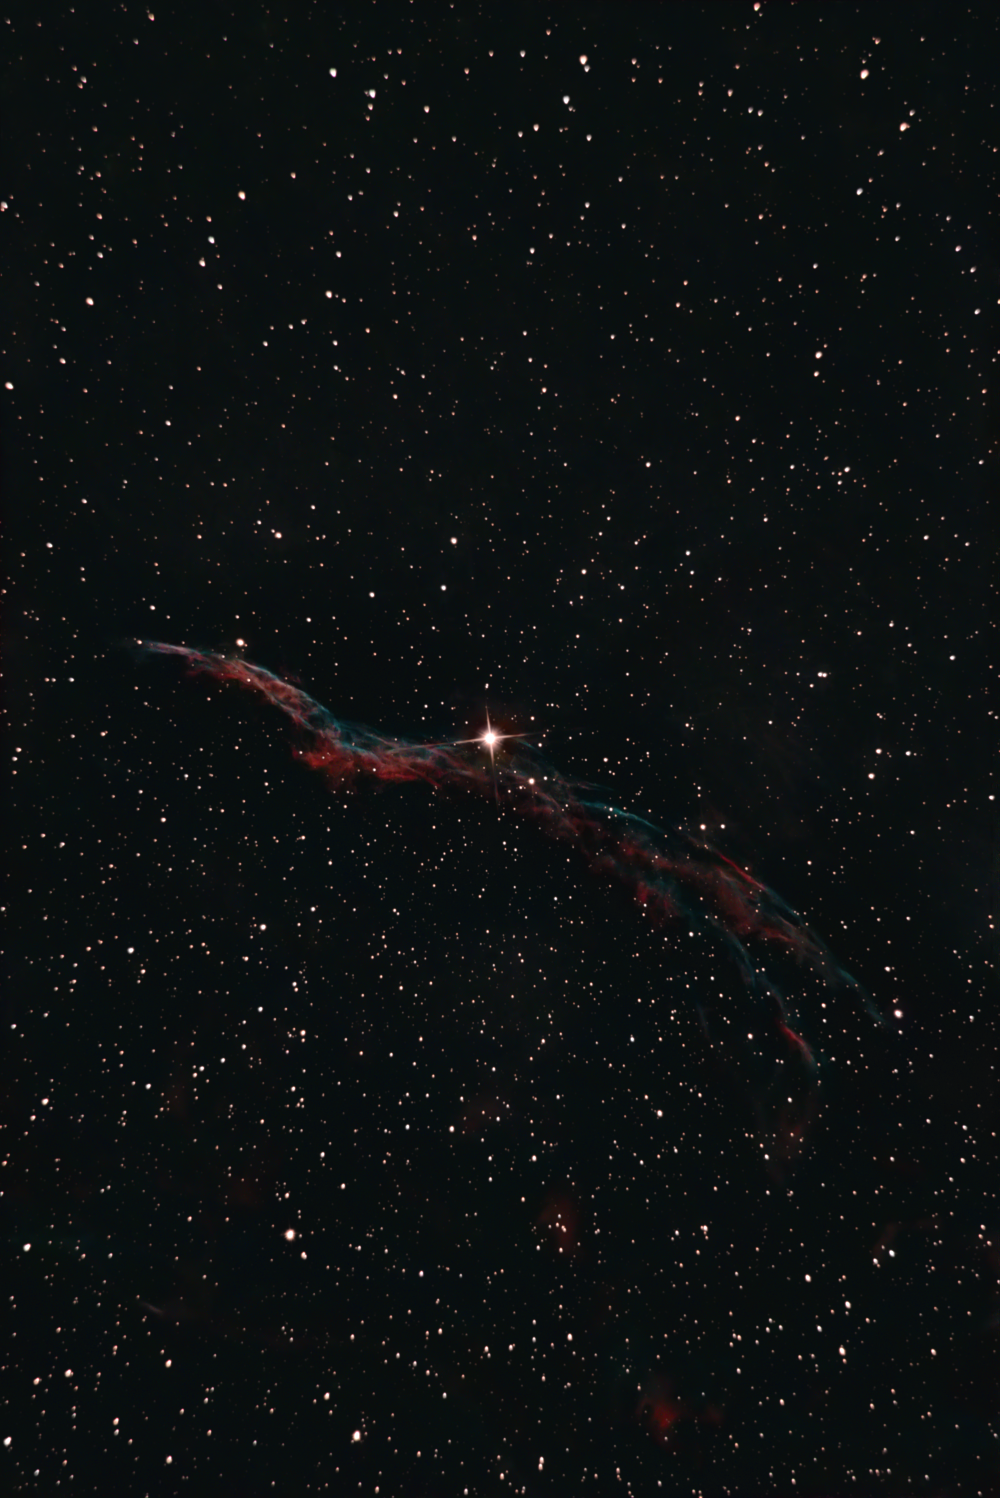 NGC 6960 - Western Veil nebula, aka "Witch's Broom"